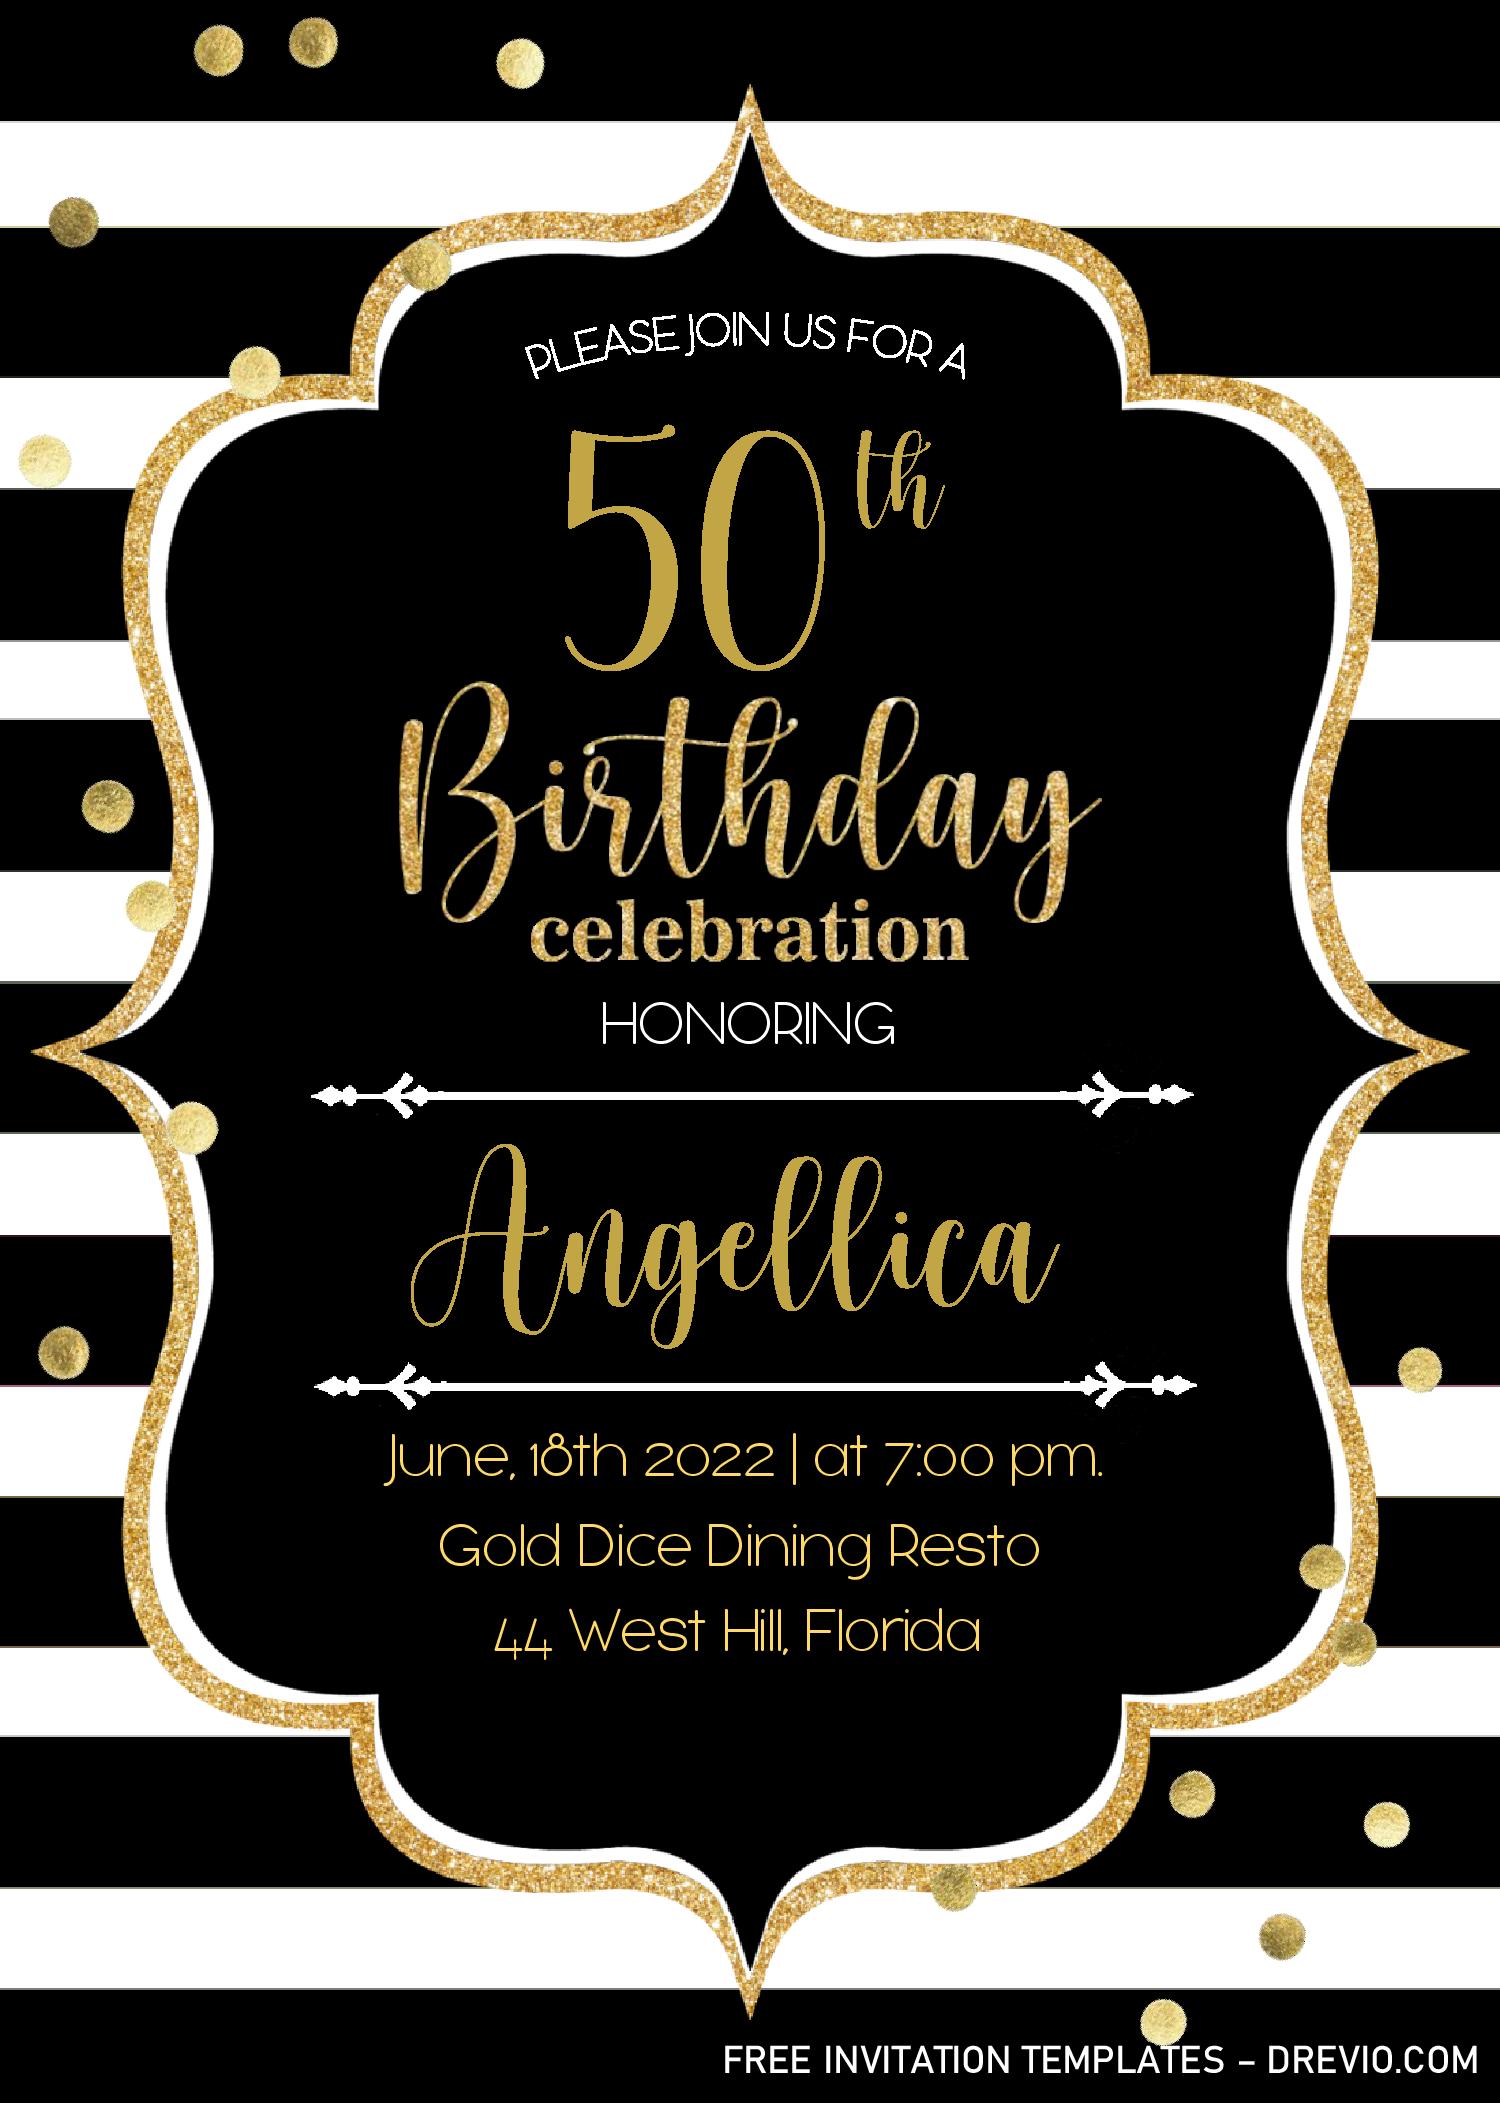 Editable Birthday Invitations Templates Free With Photo FREE 